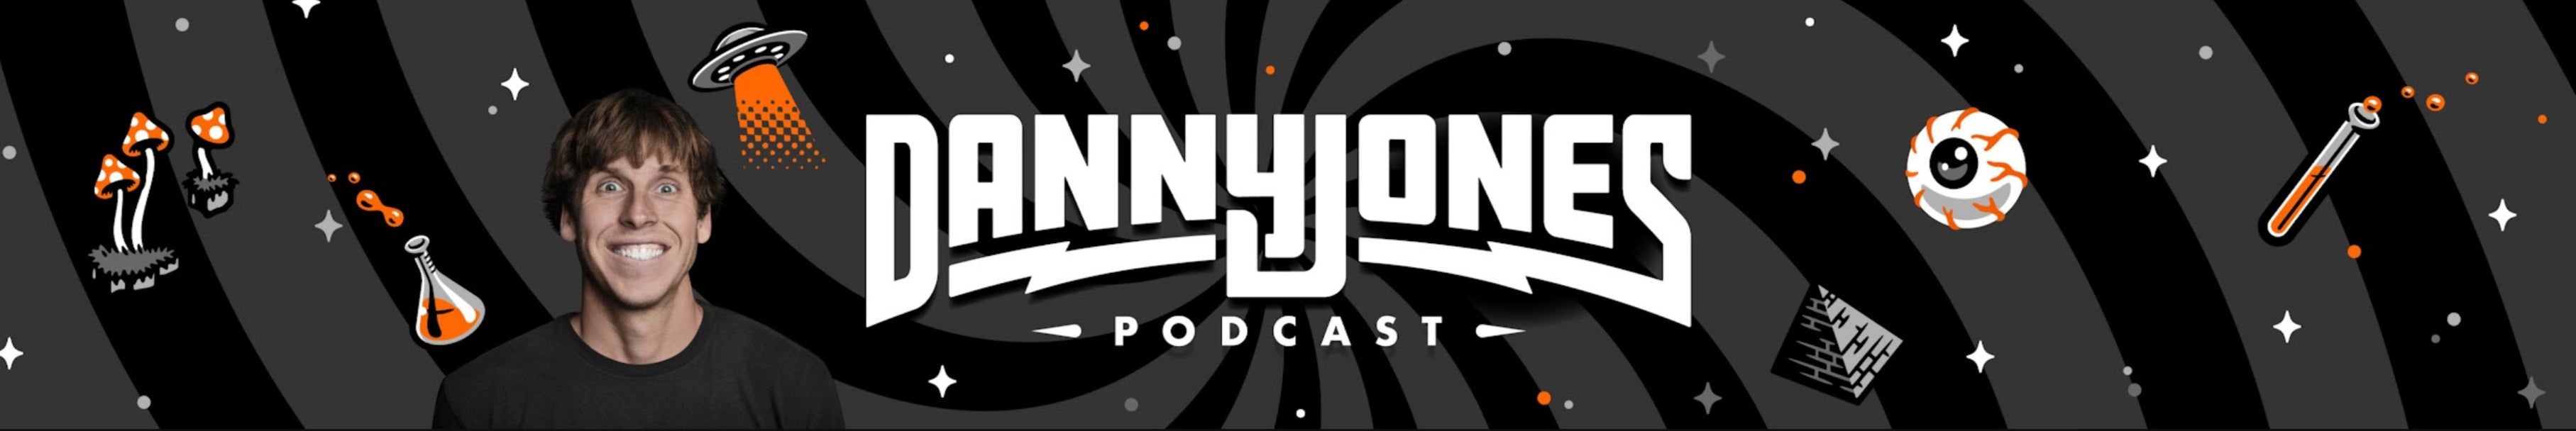 Danny-Jones-podcast